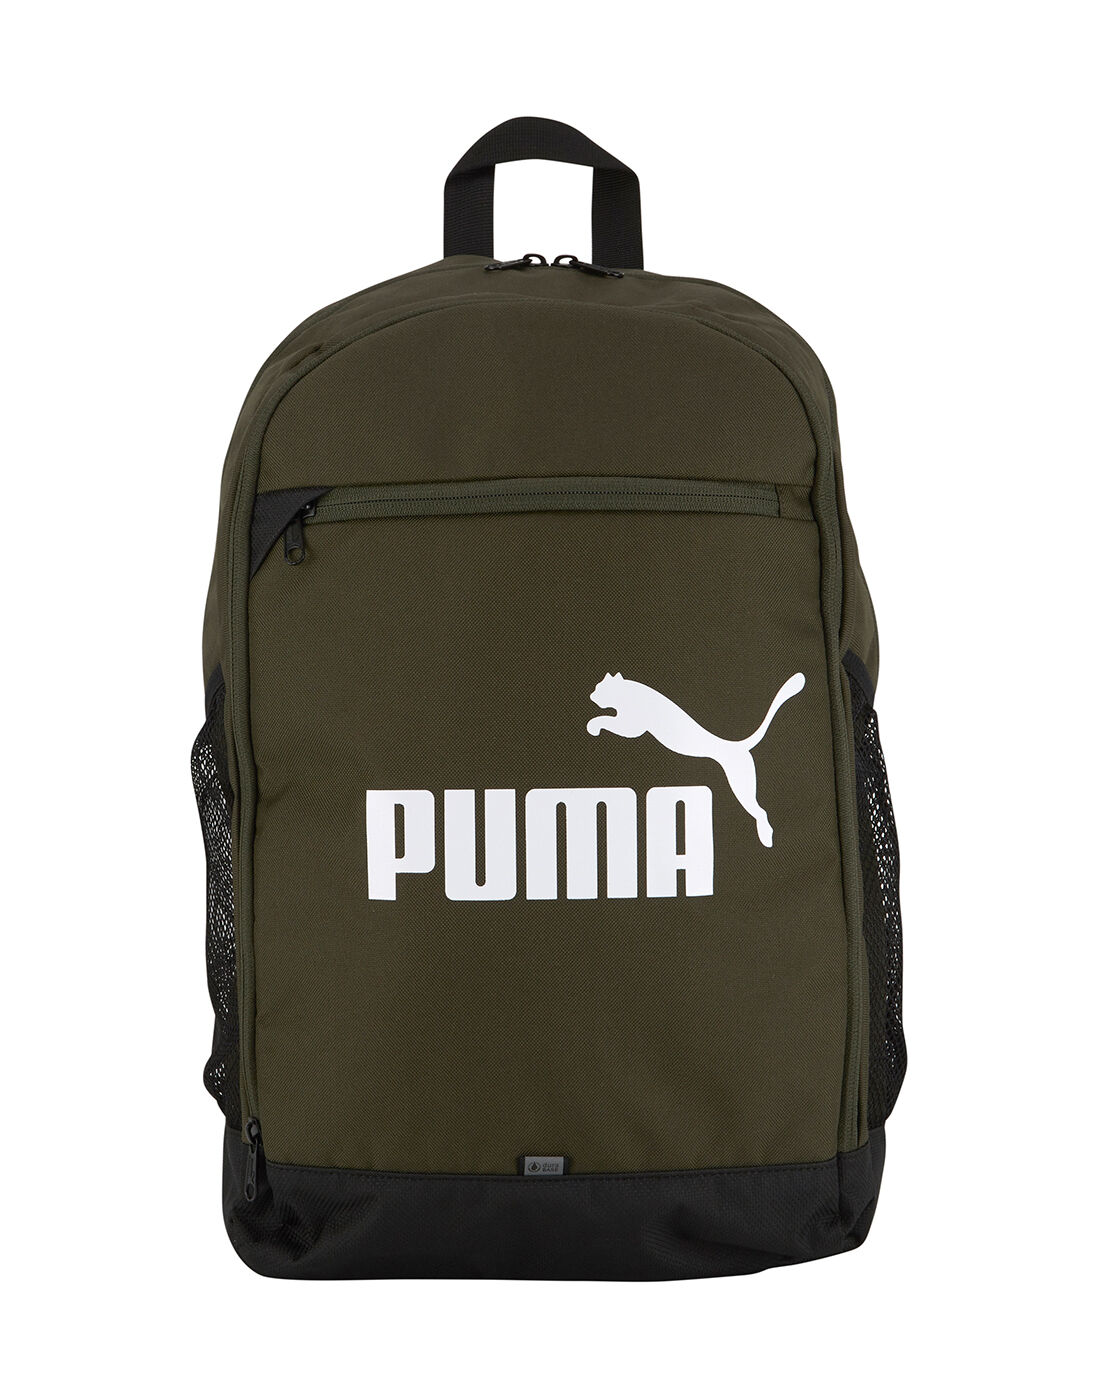 puma backpacks for school